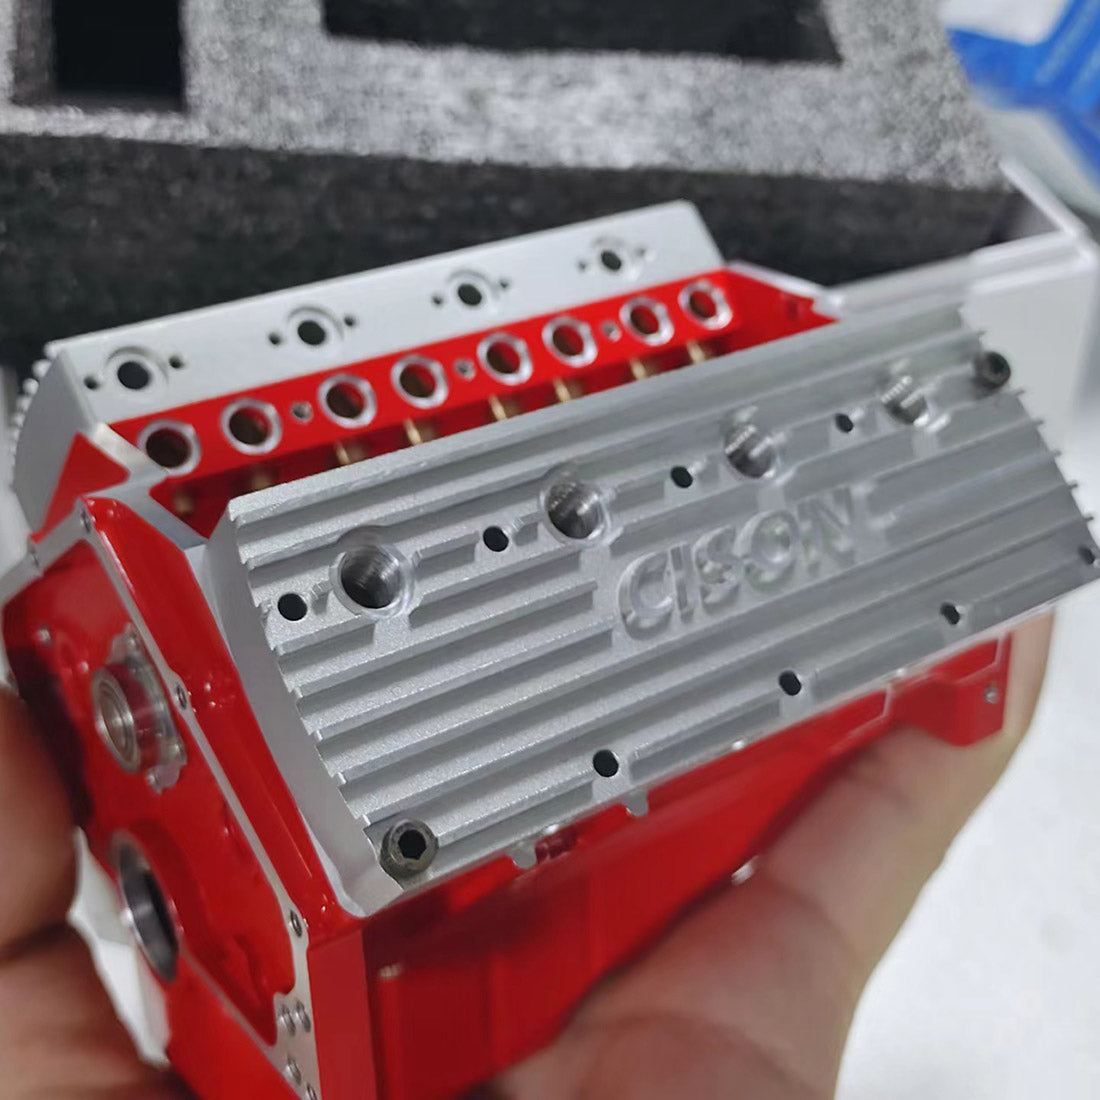 cison v8 engine model kit that works build your own v8 engine small block chevrolet